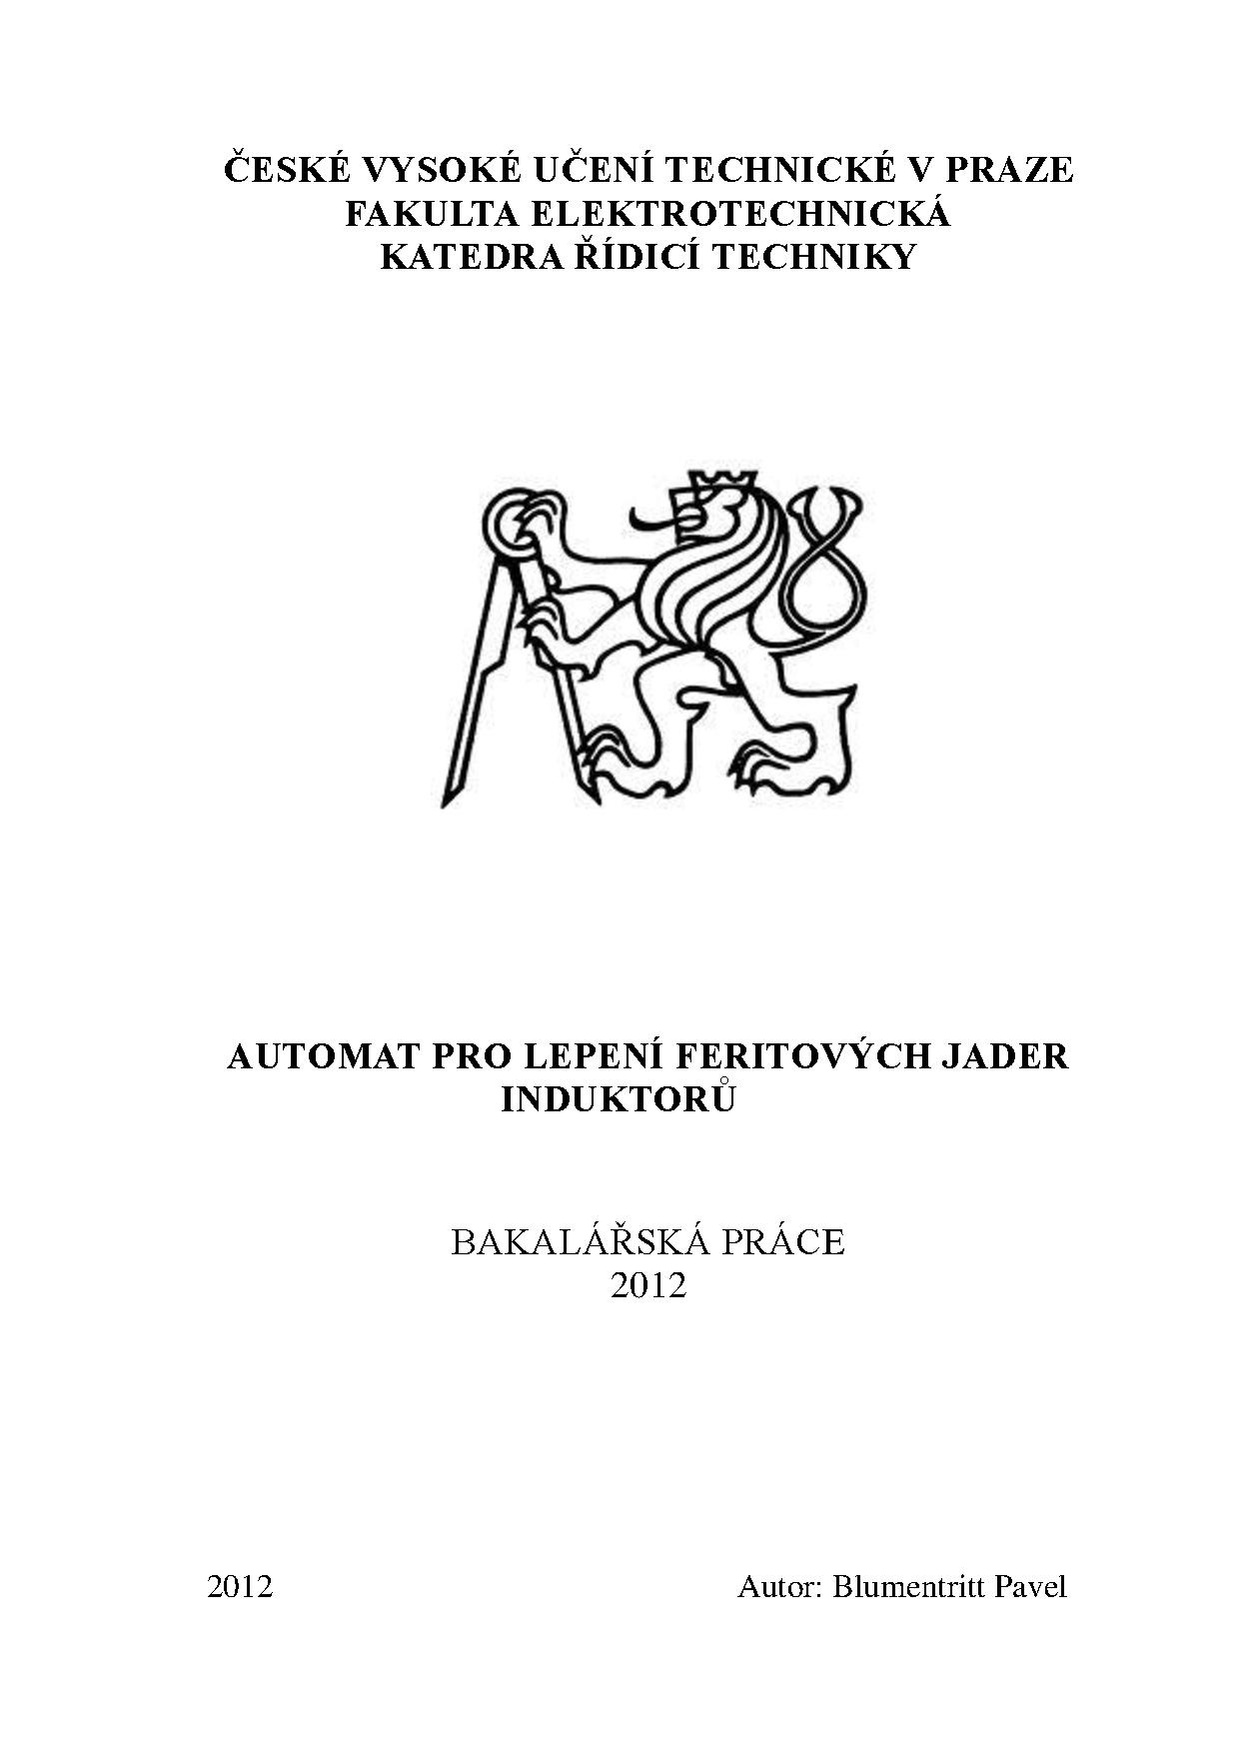 Bp 2012 blumentritt pavel.pdf